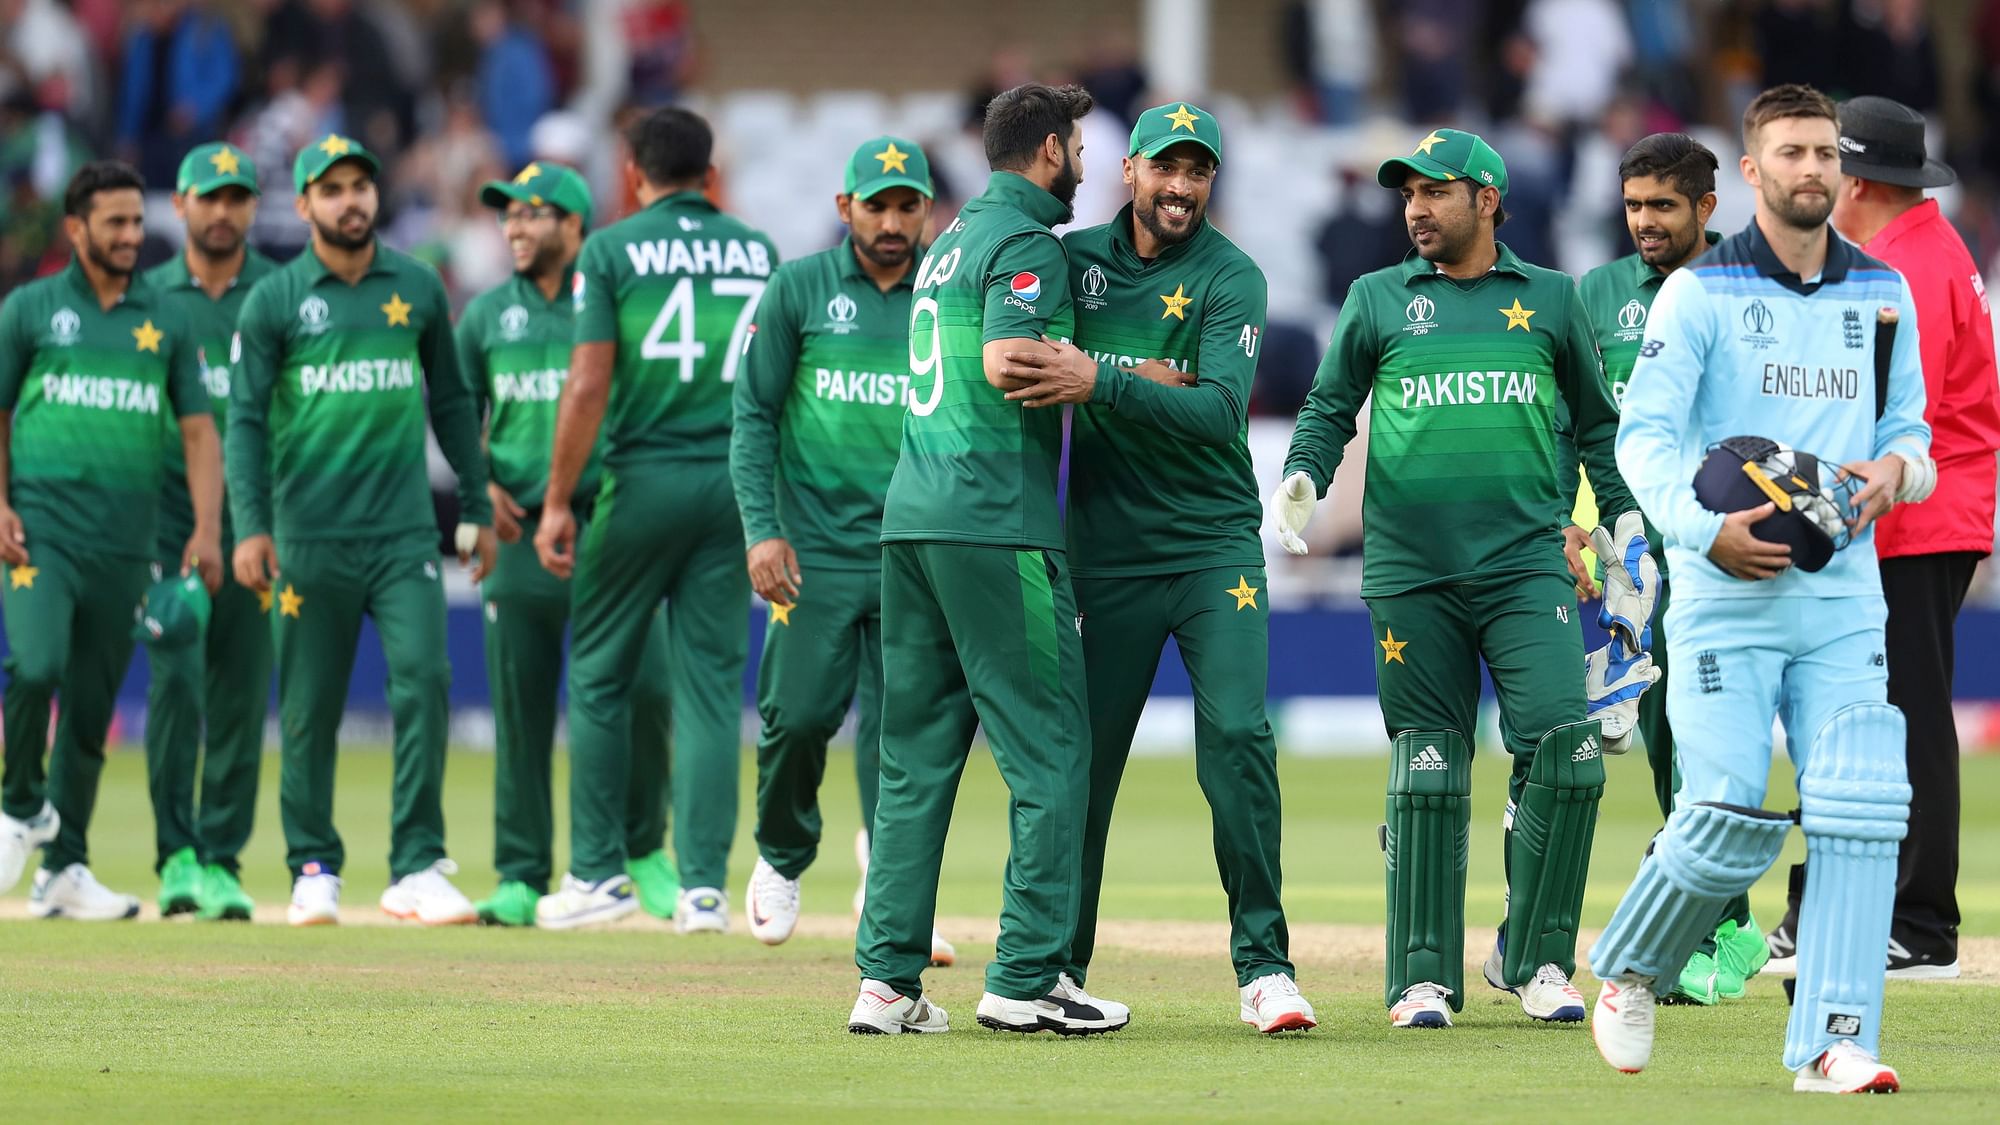 Icc World Cup 2019 Pakistan End 12 Match Losing Streak With Impressive Win Vs England